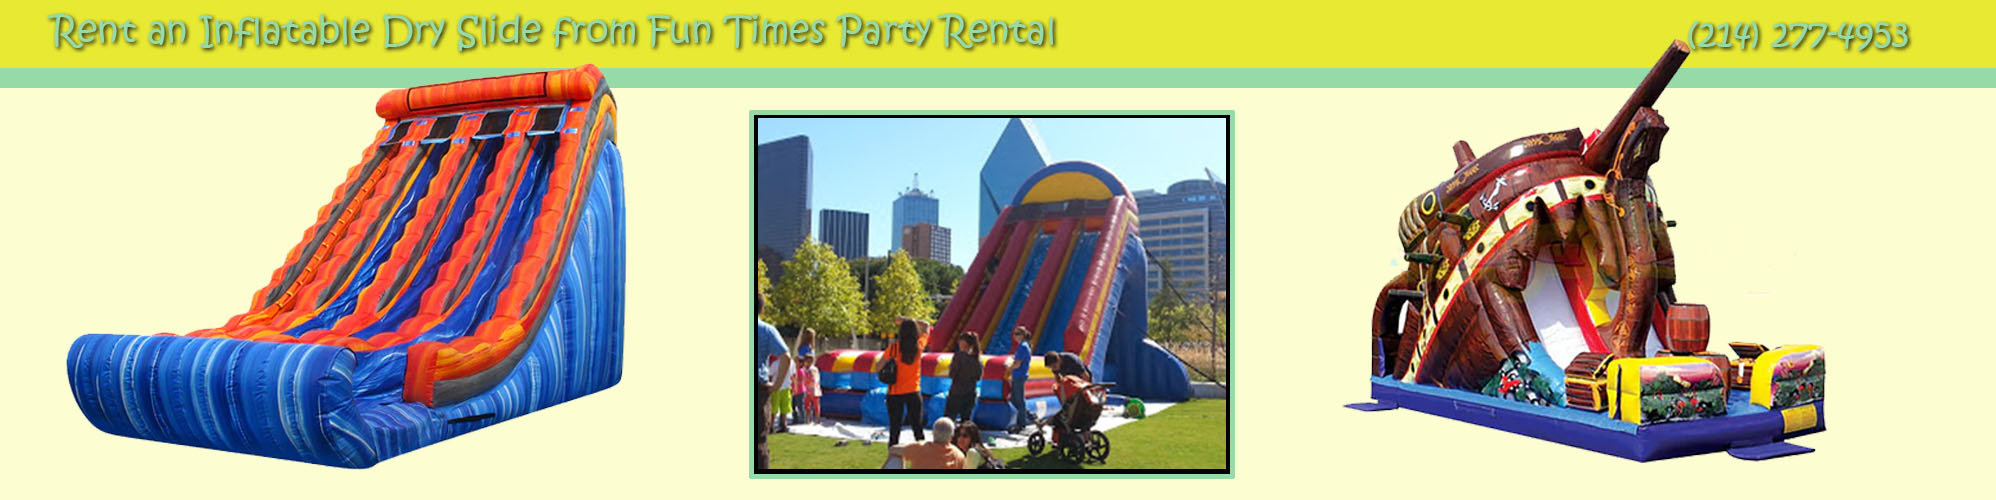 Inflatable Dry Slide Rental